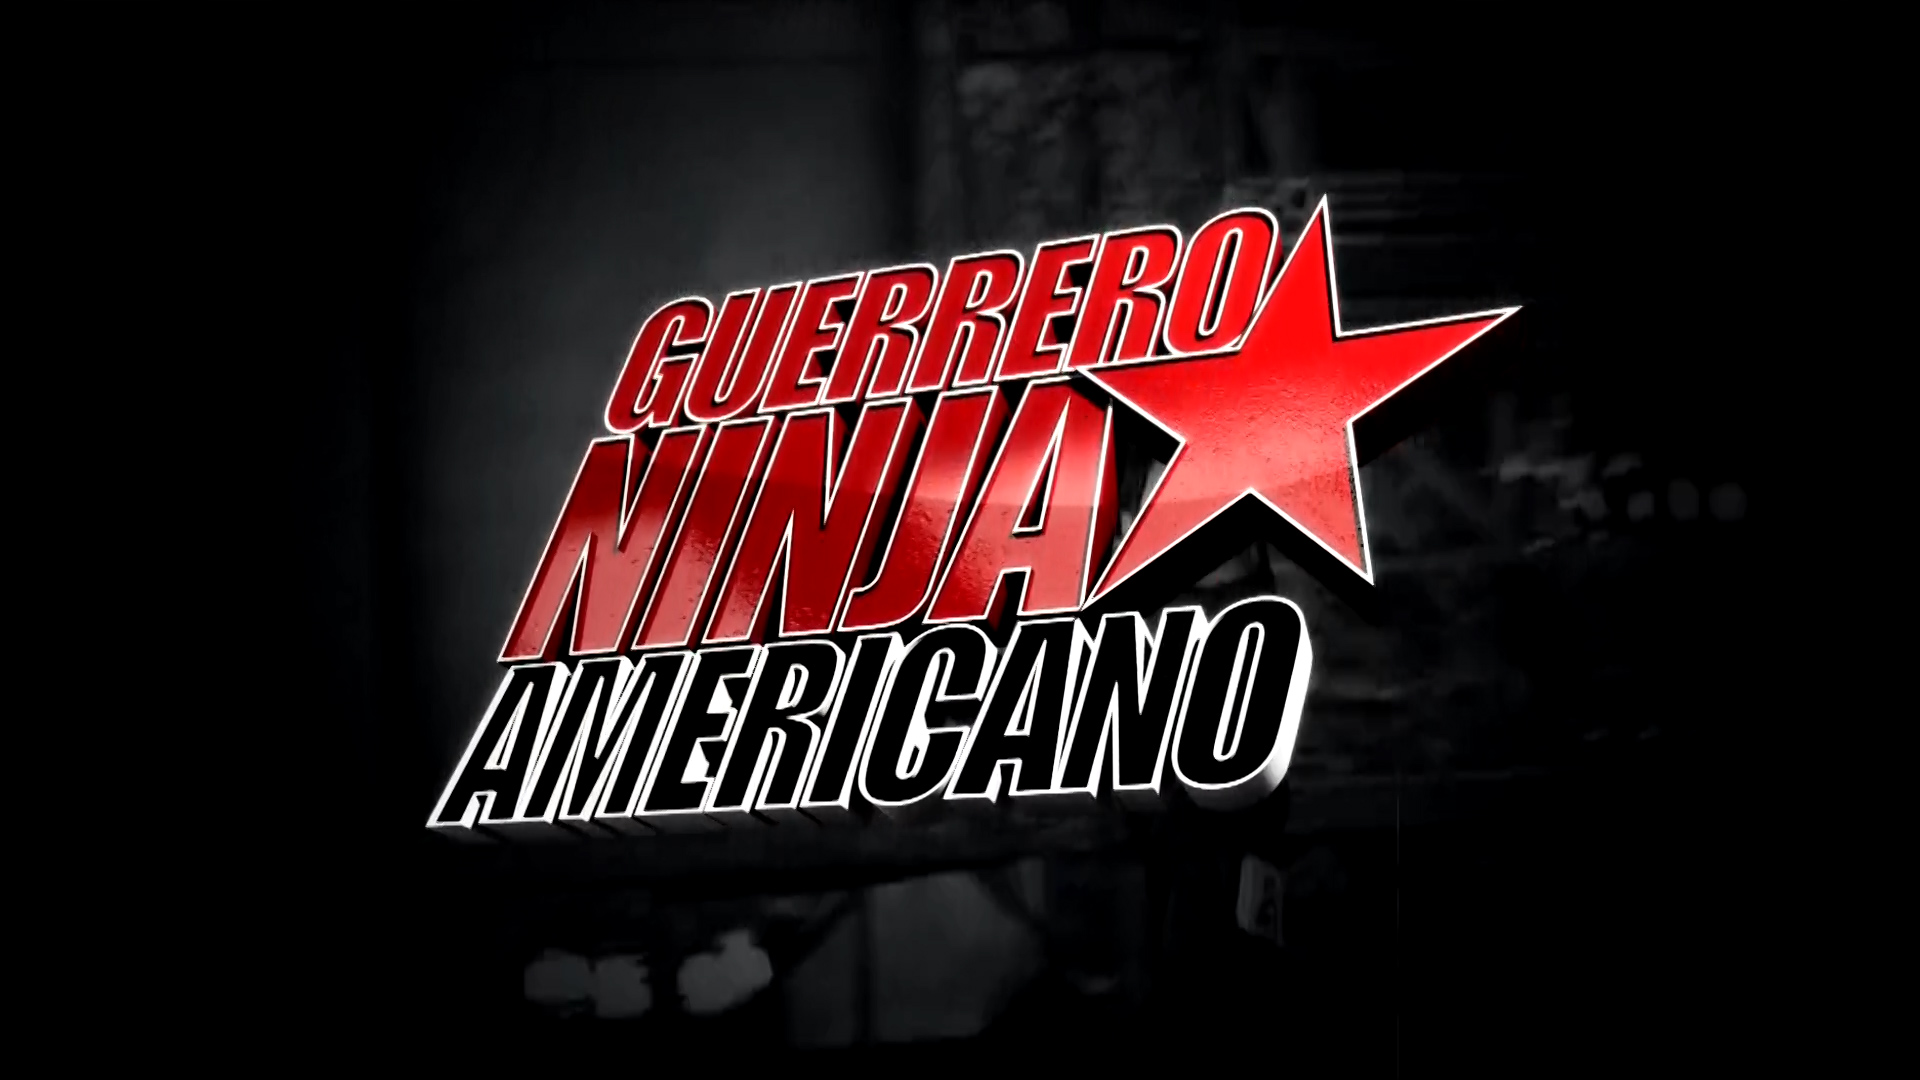 Guerrero ninja americano Doblaje Wiki Fandom